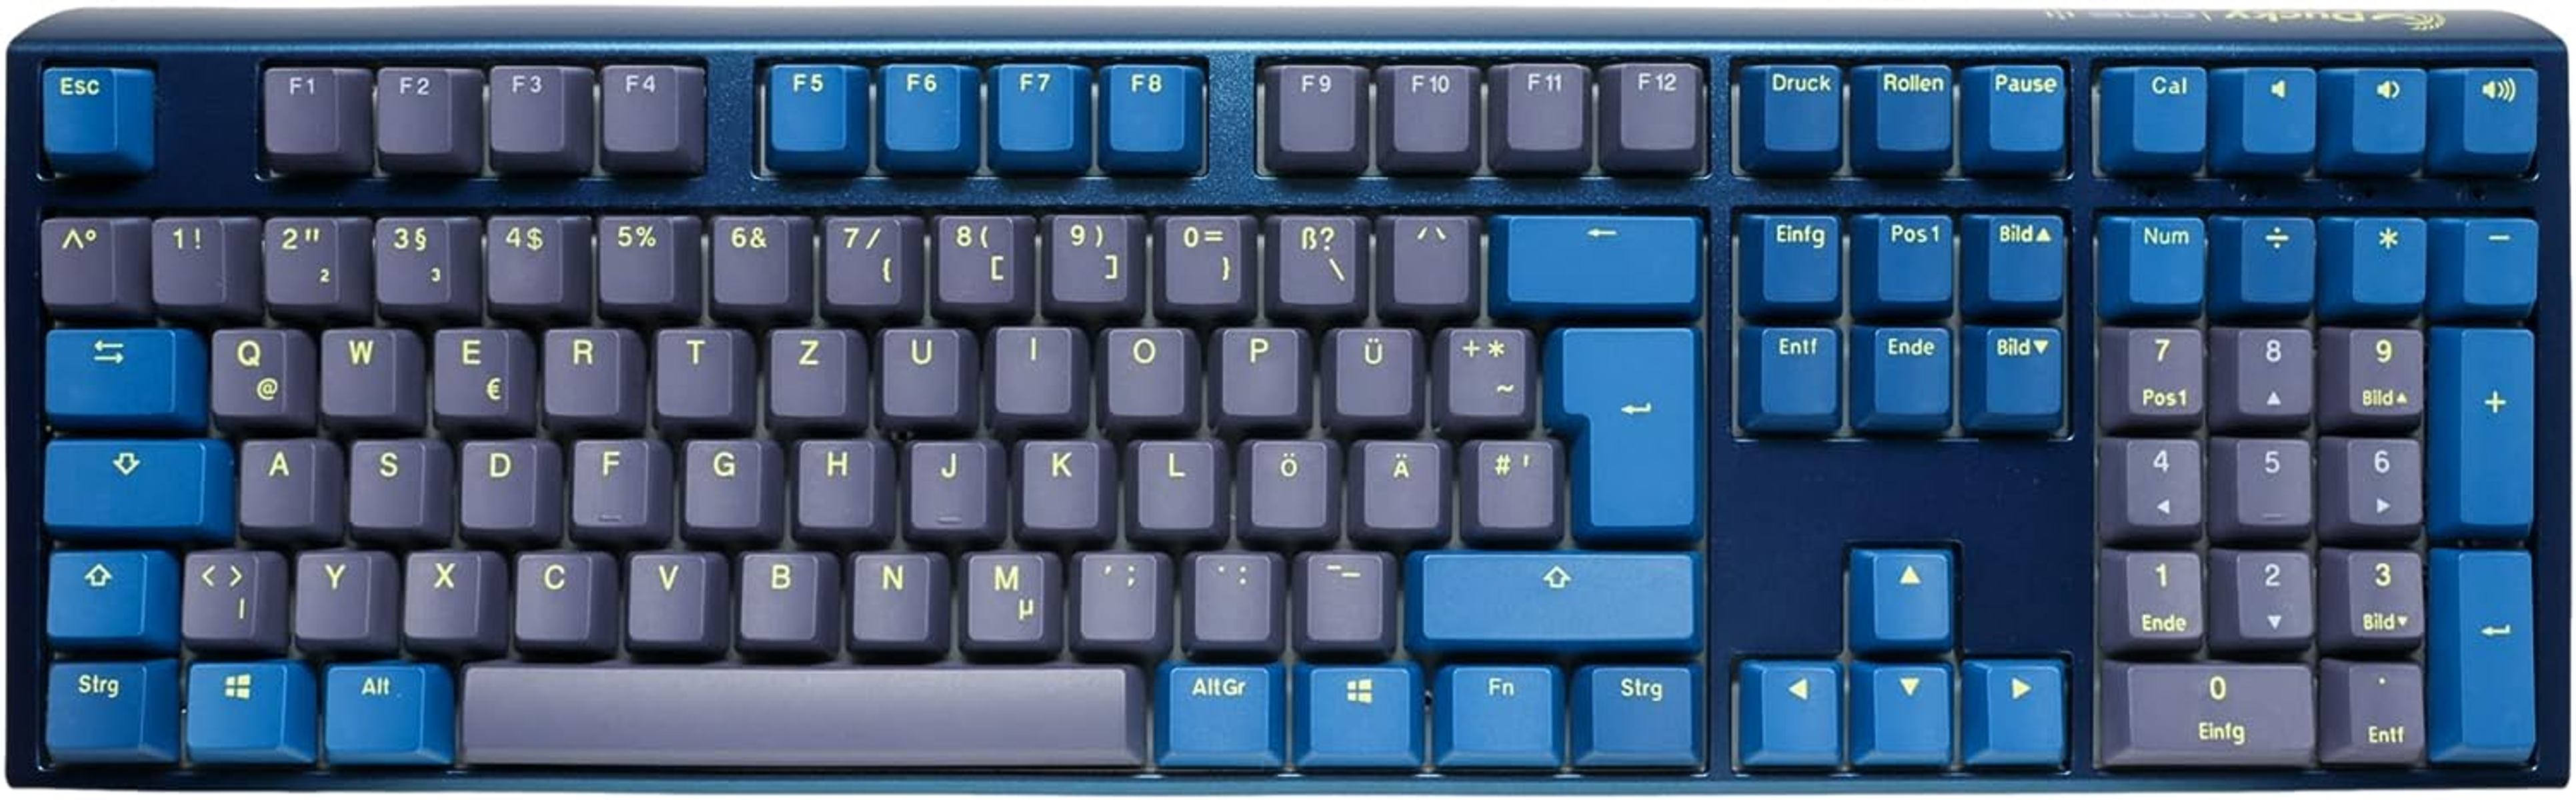 DUCKY Tastatur DKON2108ST-WDEPDDBBHHC1,